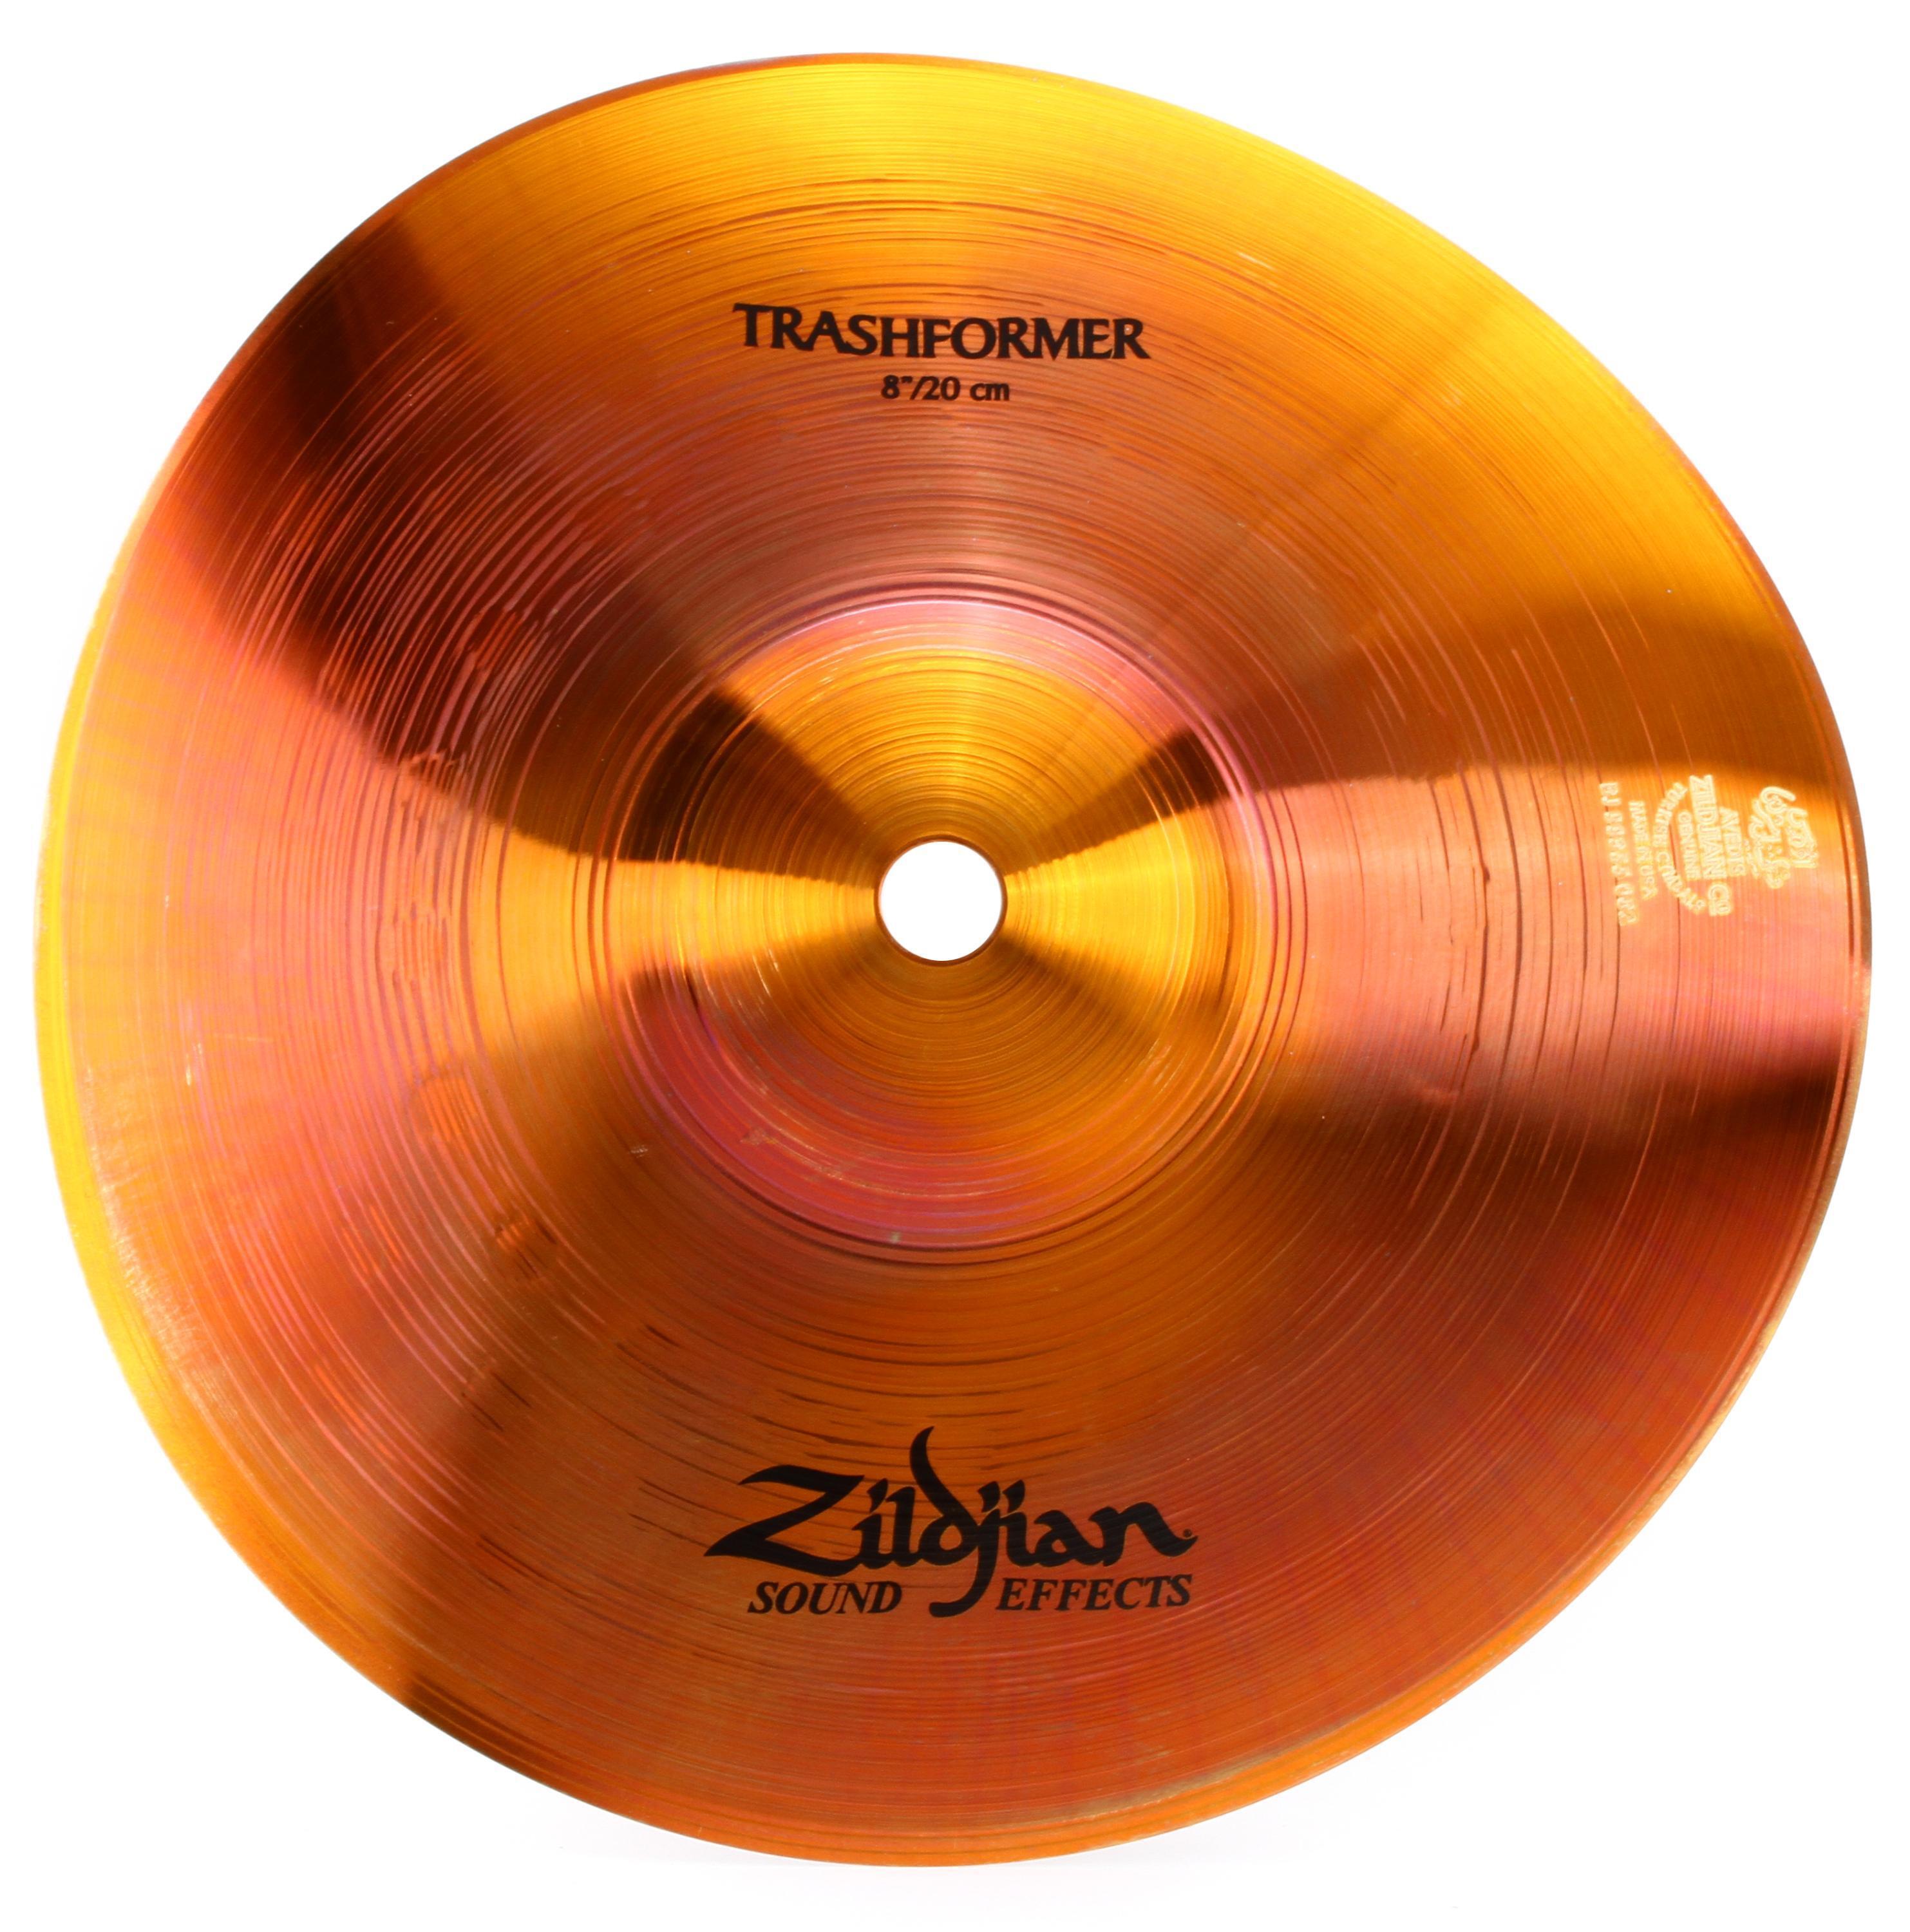 Zildjian 8 inch FX Trashformer Cymbal | Sweetwater